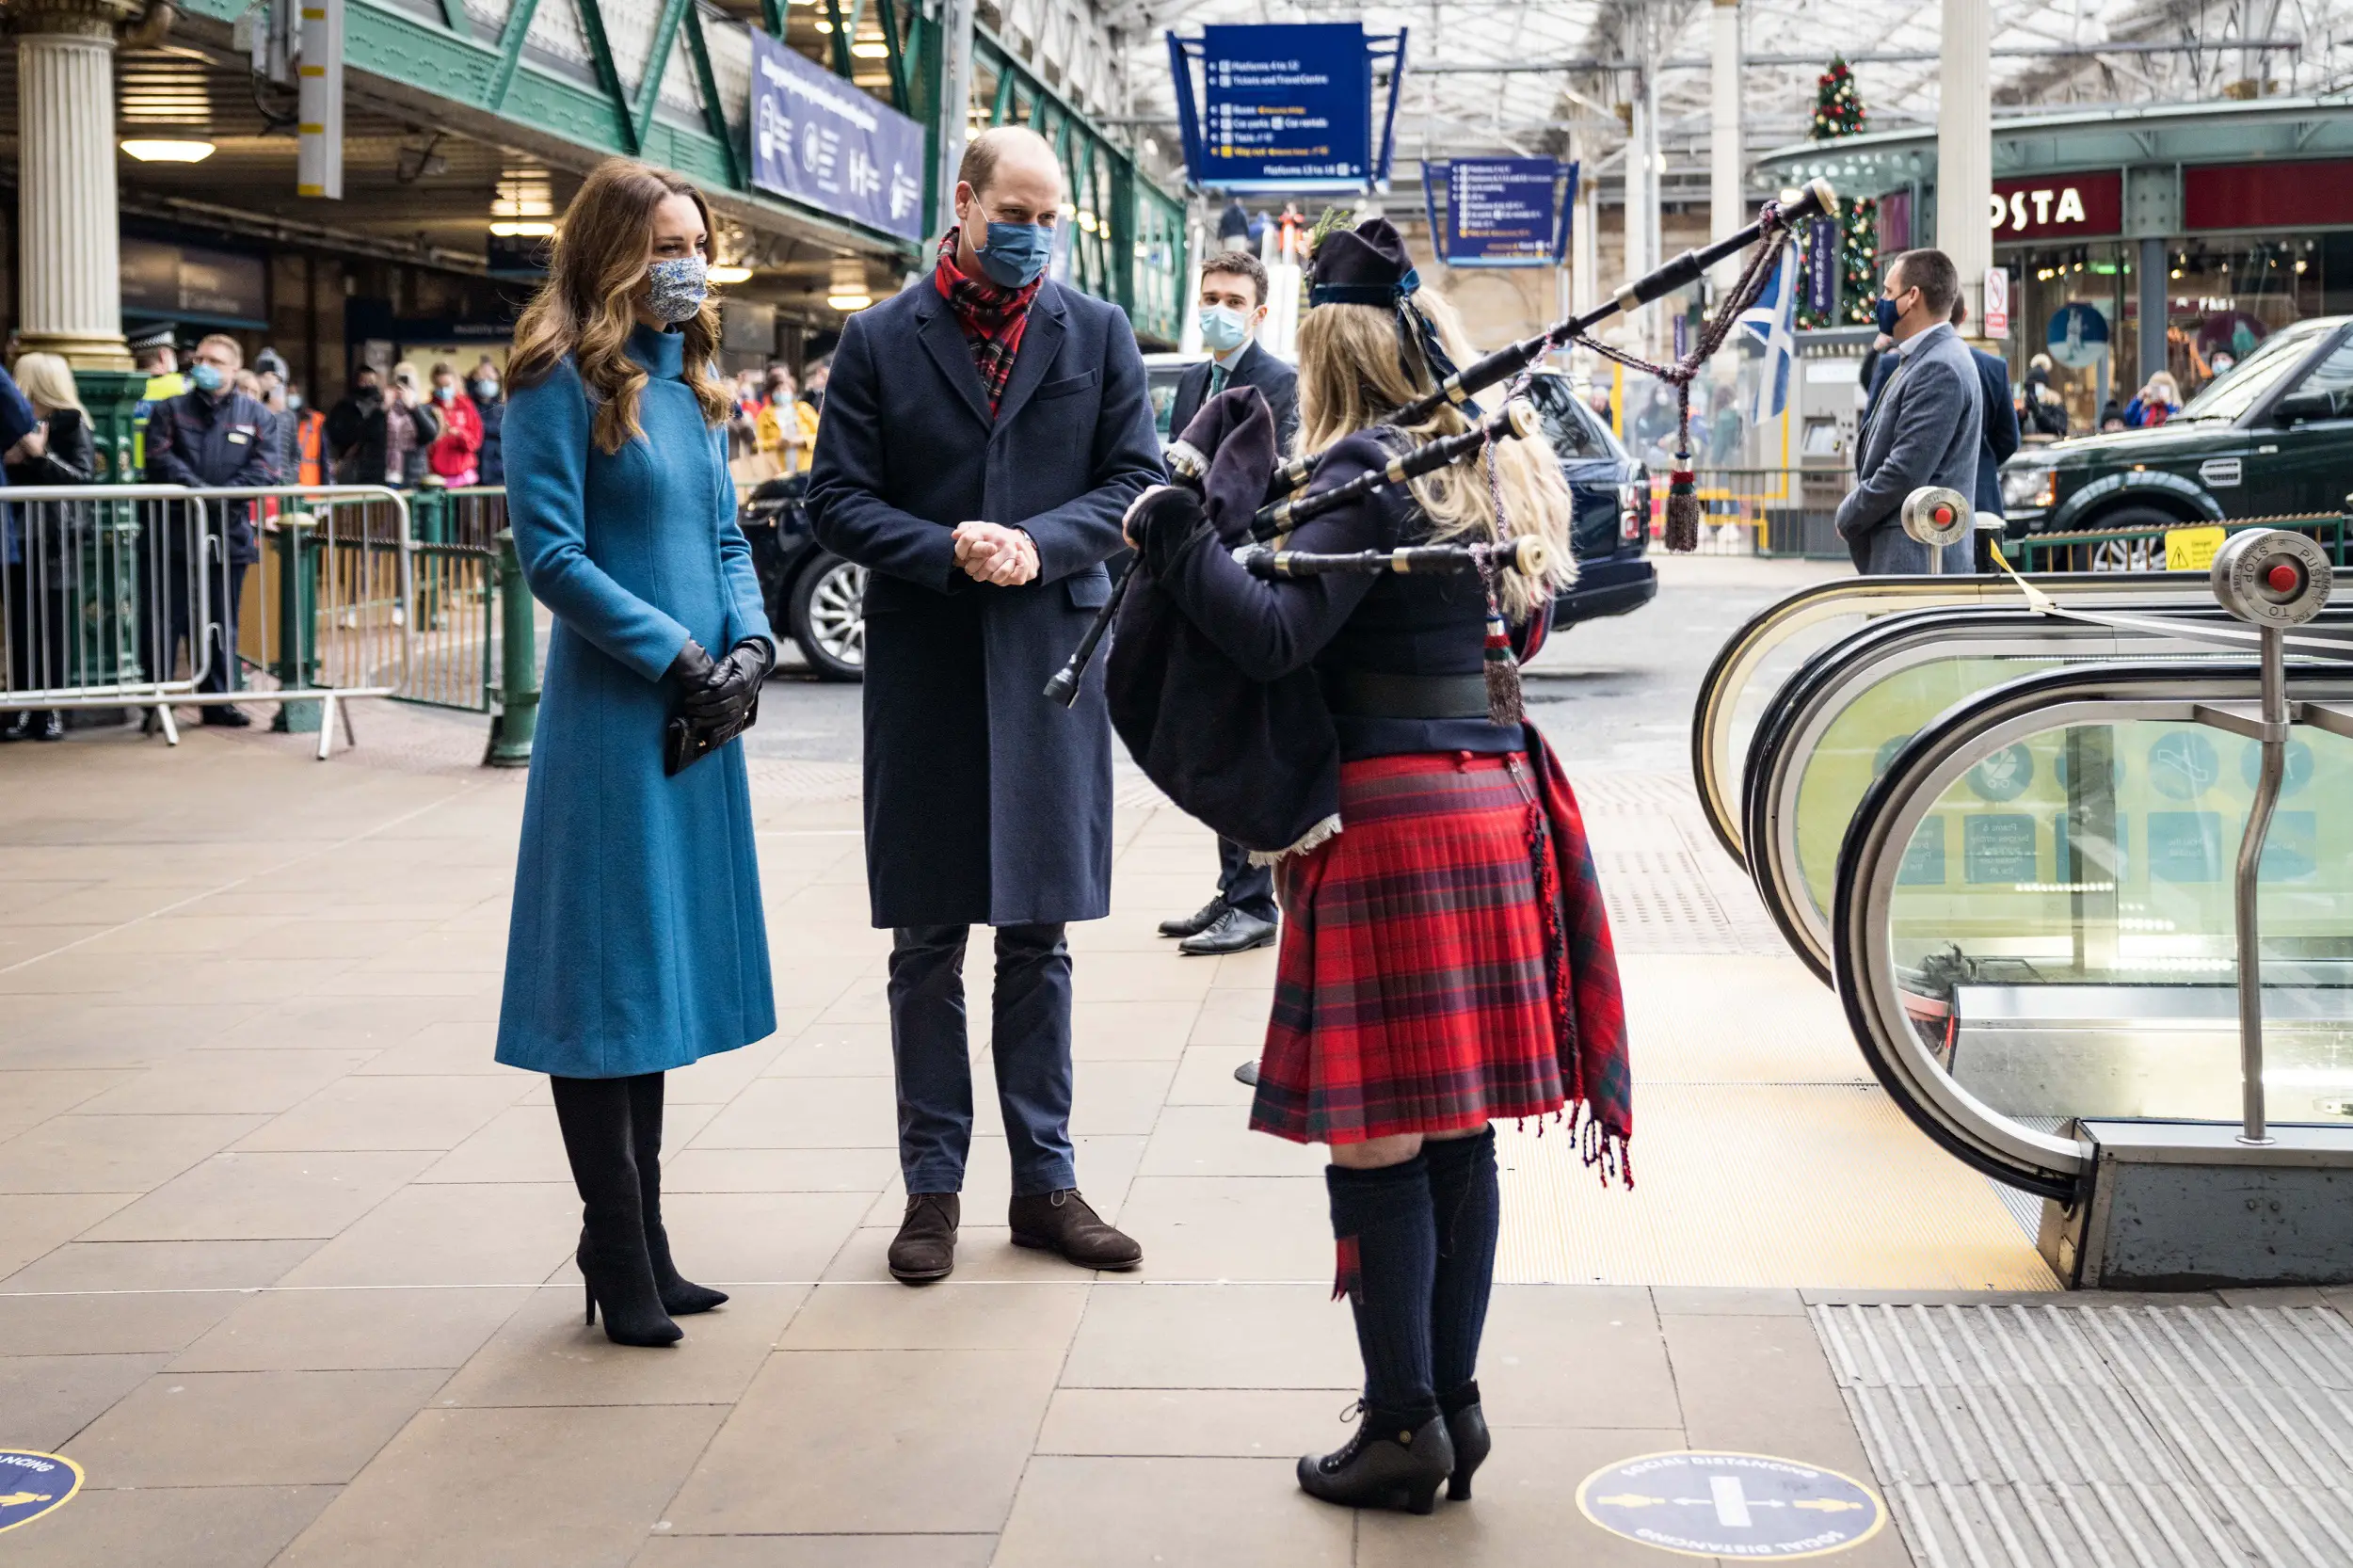 The Duke and Duchess of Cambridge arrived in Edinburgh for Royal Train Tour